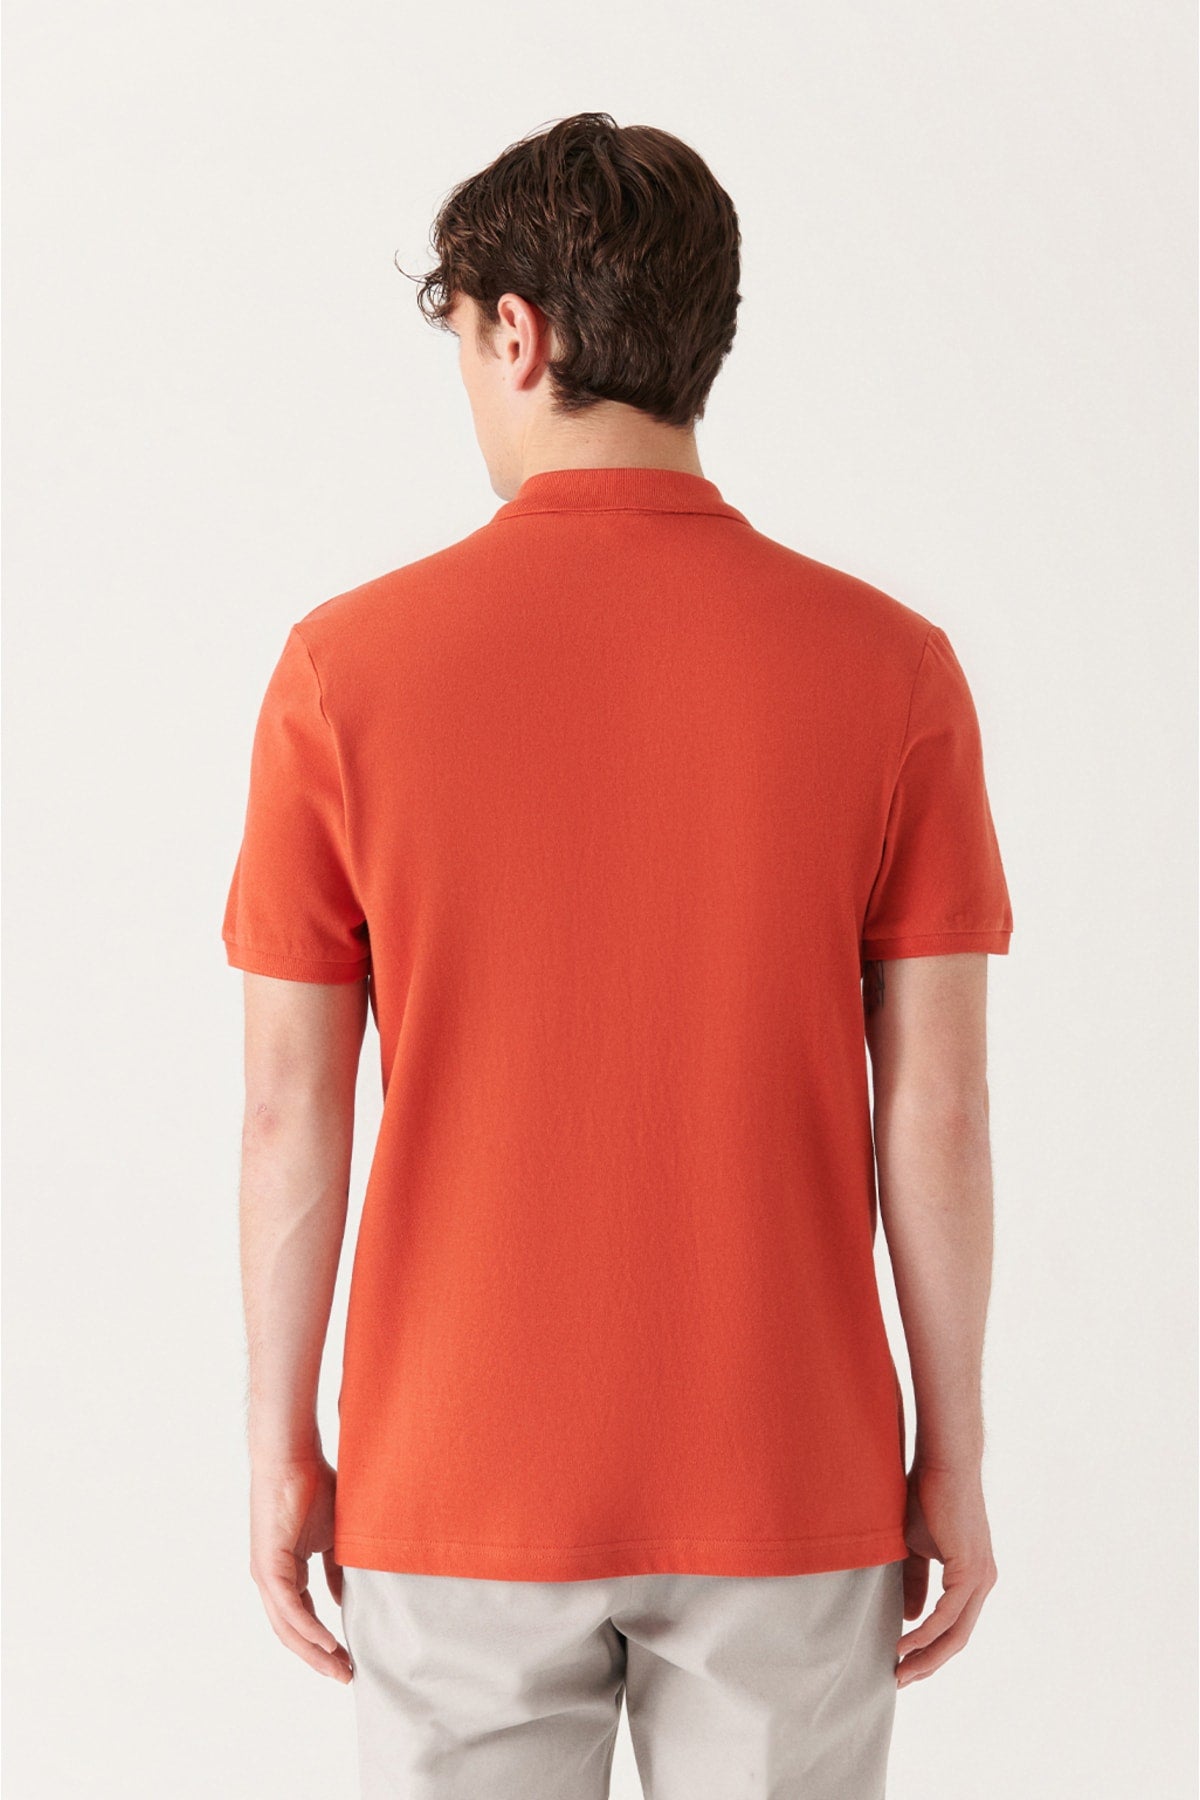 Men's Dark Orange 100% Cotton Breathable Standard Fit Normal Cut Polo Neck T-shirt E001004